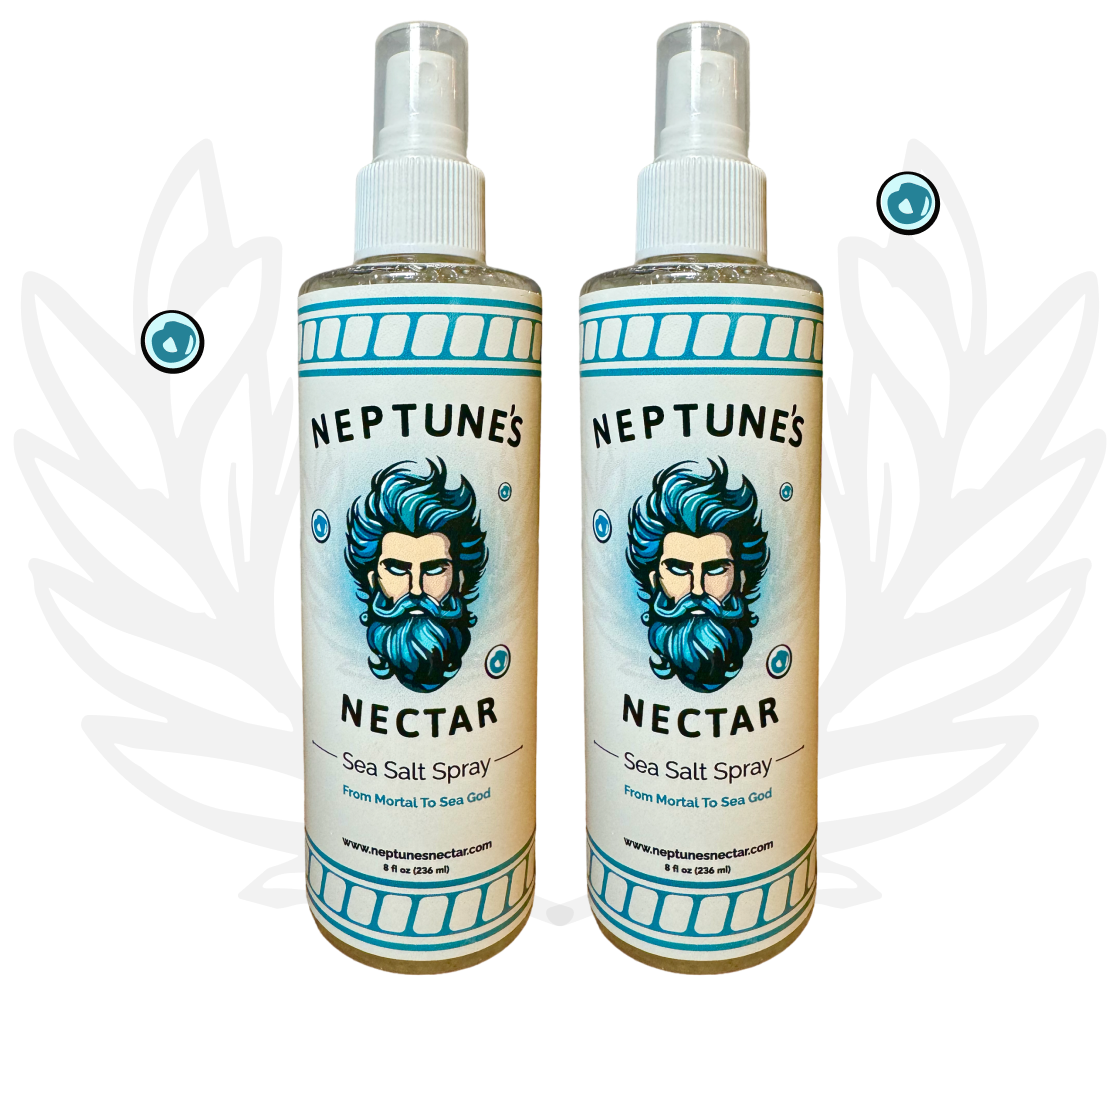 Neptune's Nectar Sea Salt Spray